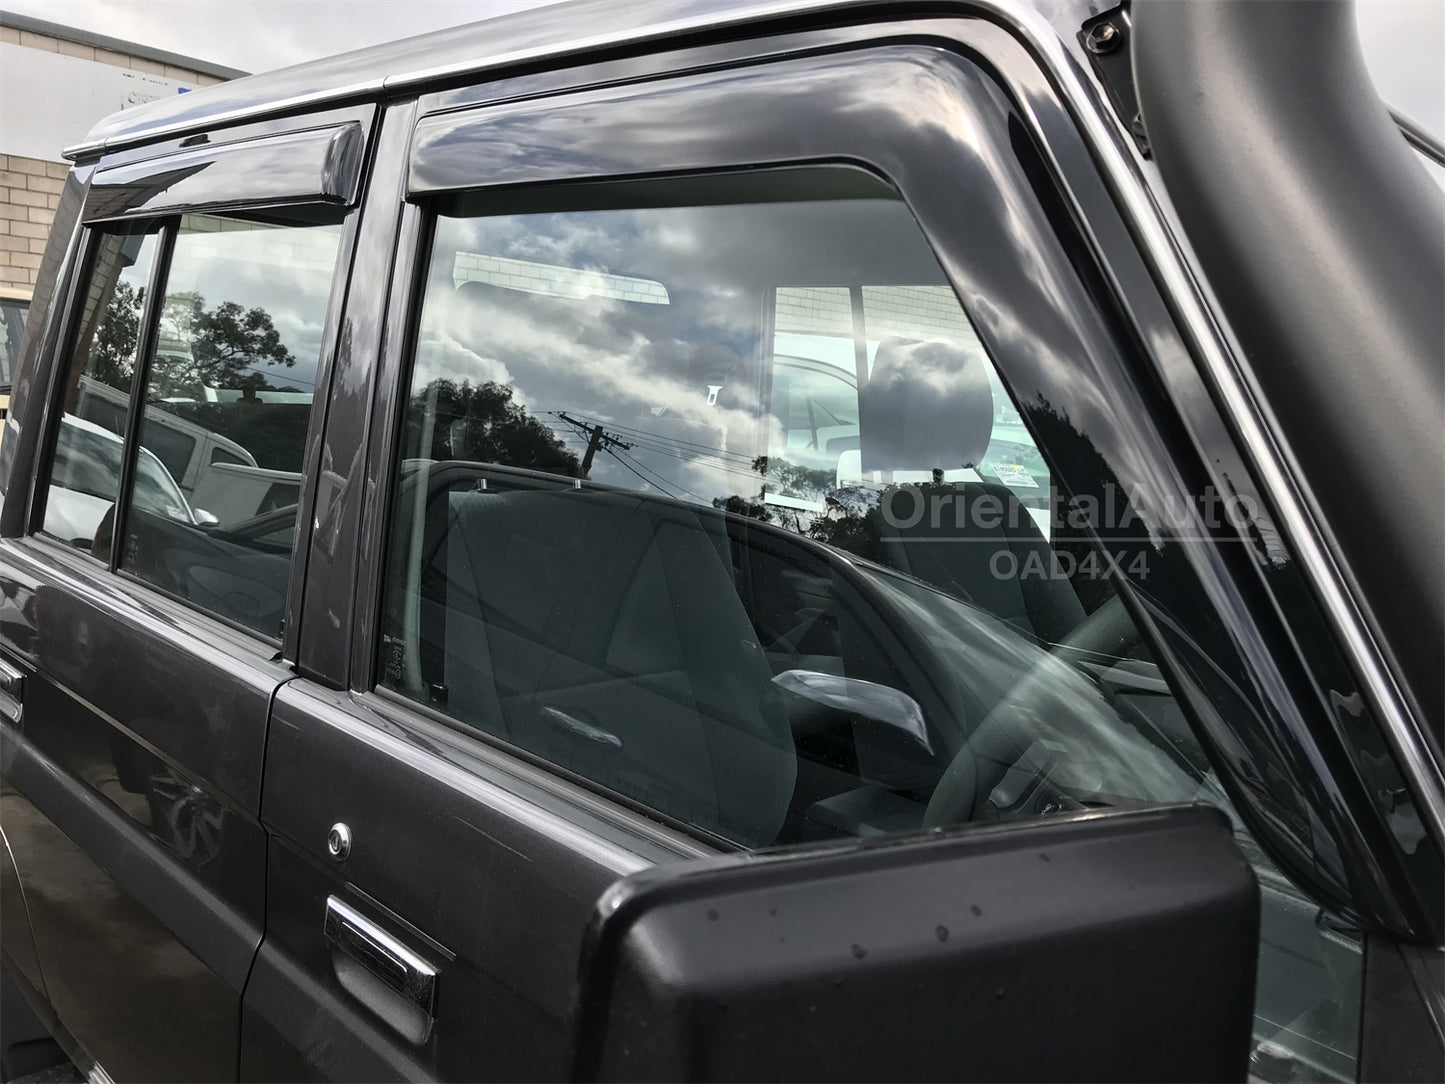 Bonnet Protector & Luxury Weathershields Weather Shields Window Visors for Toyota Landcruiser Land Cruiser 70 76 79 LC70 LC76 LC79 2007-2016